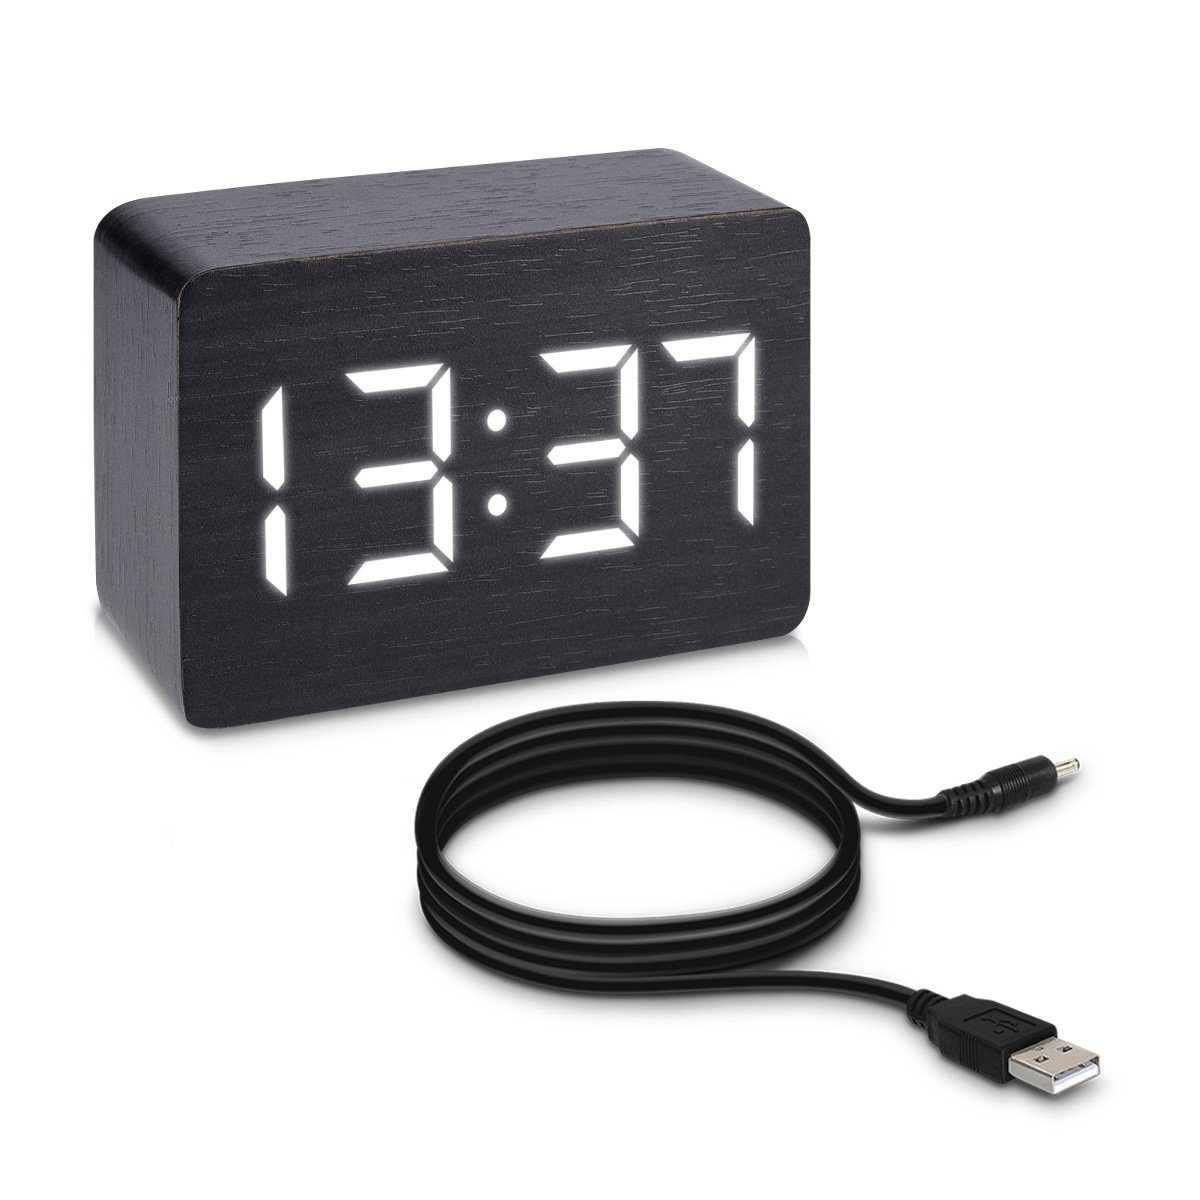 1 Stk LED Wecker Digital Alarmwecker Uhr Kalender Schlummerfunktion USB Neu 